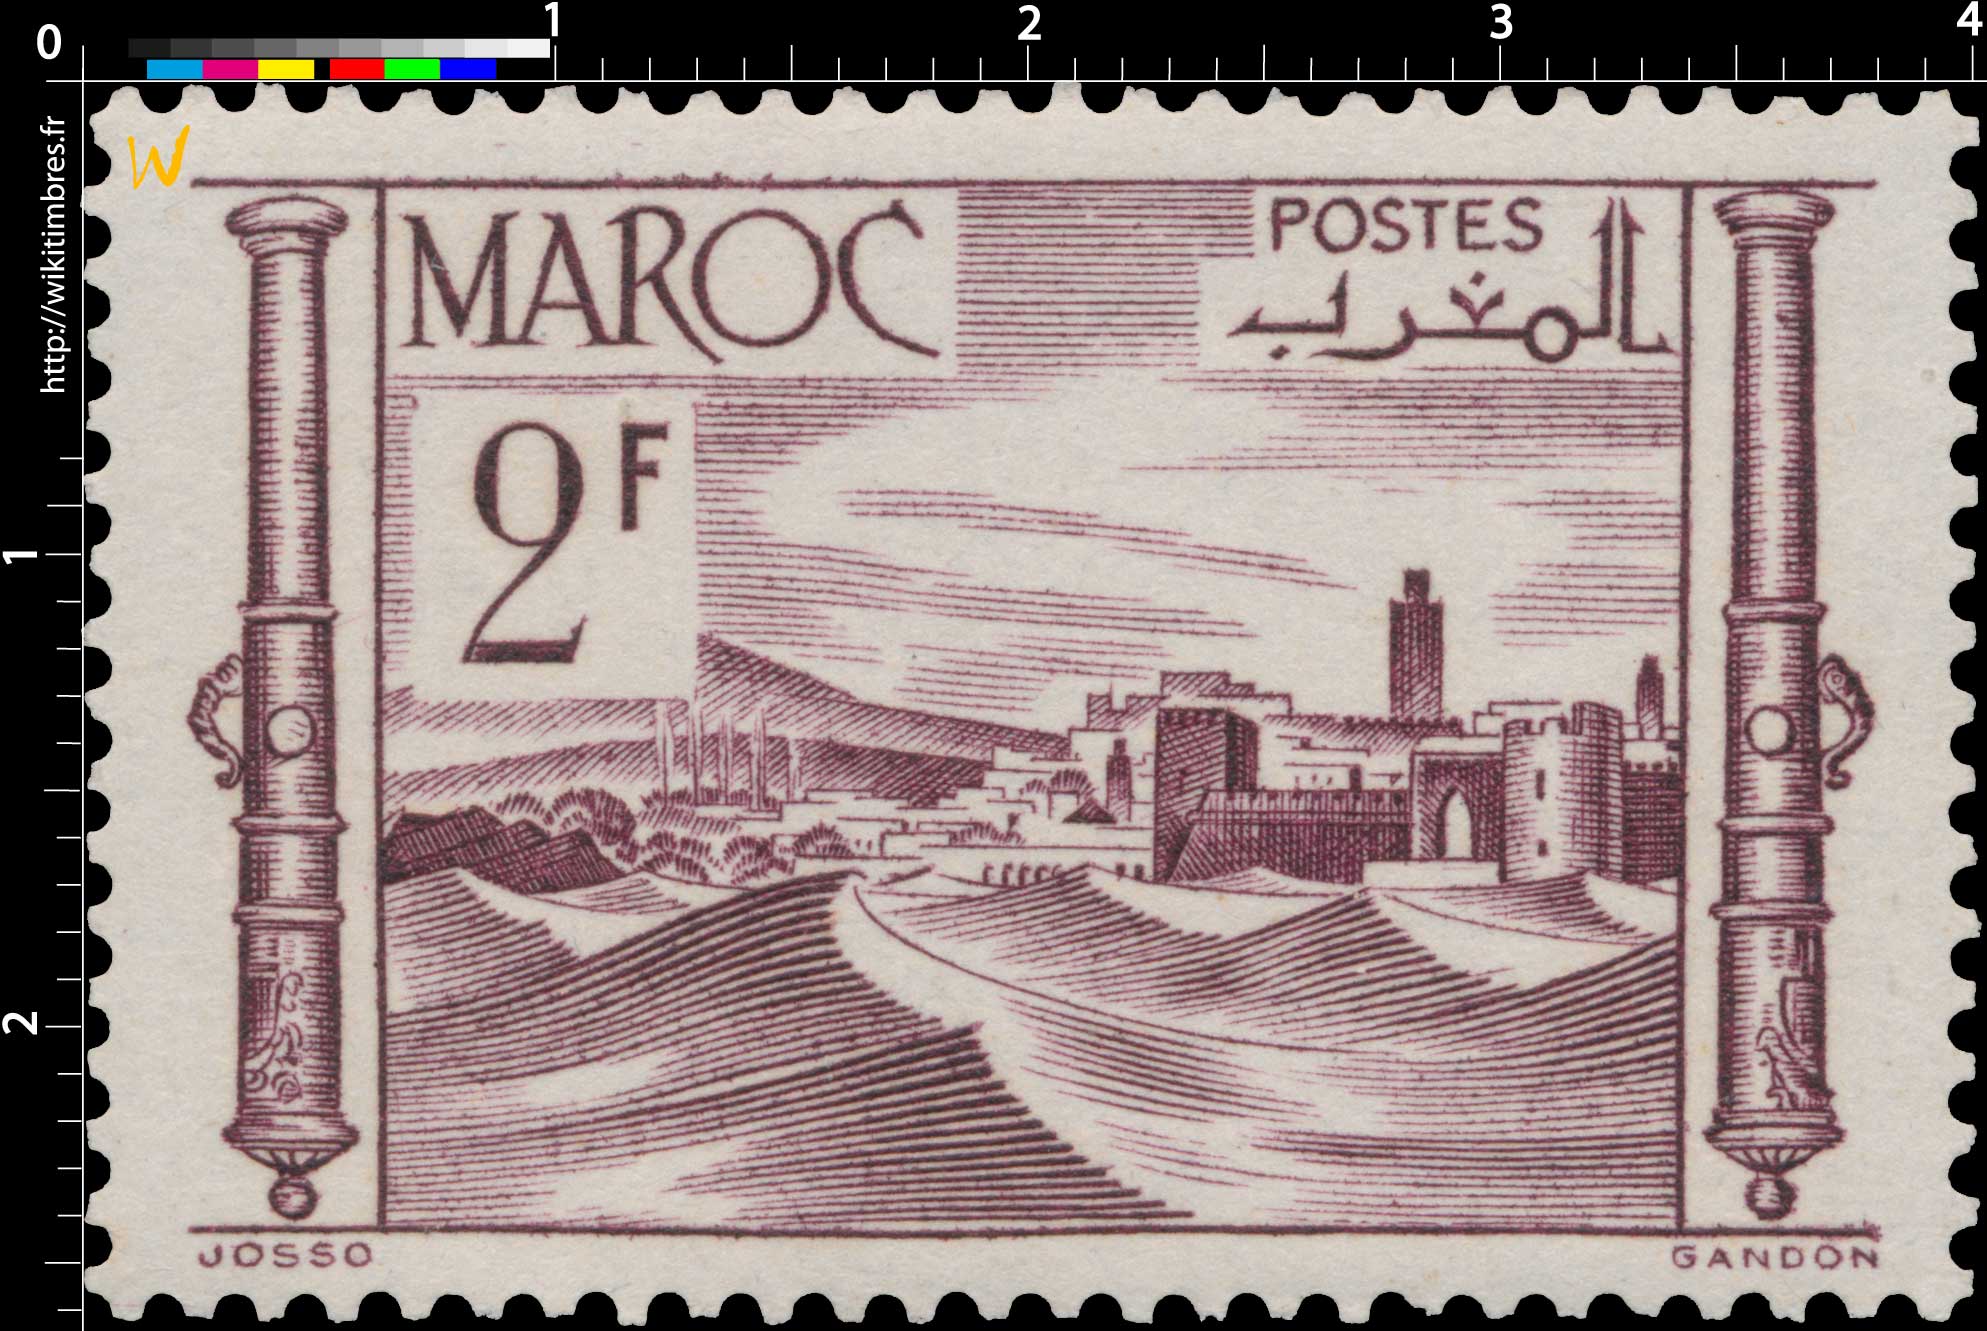 1947 Maroc - Forteresse